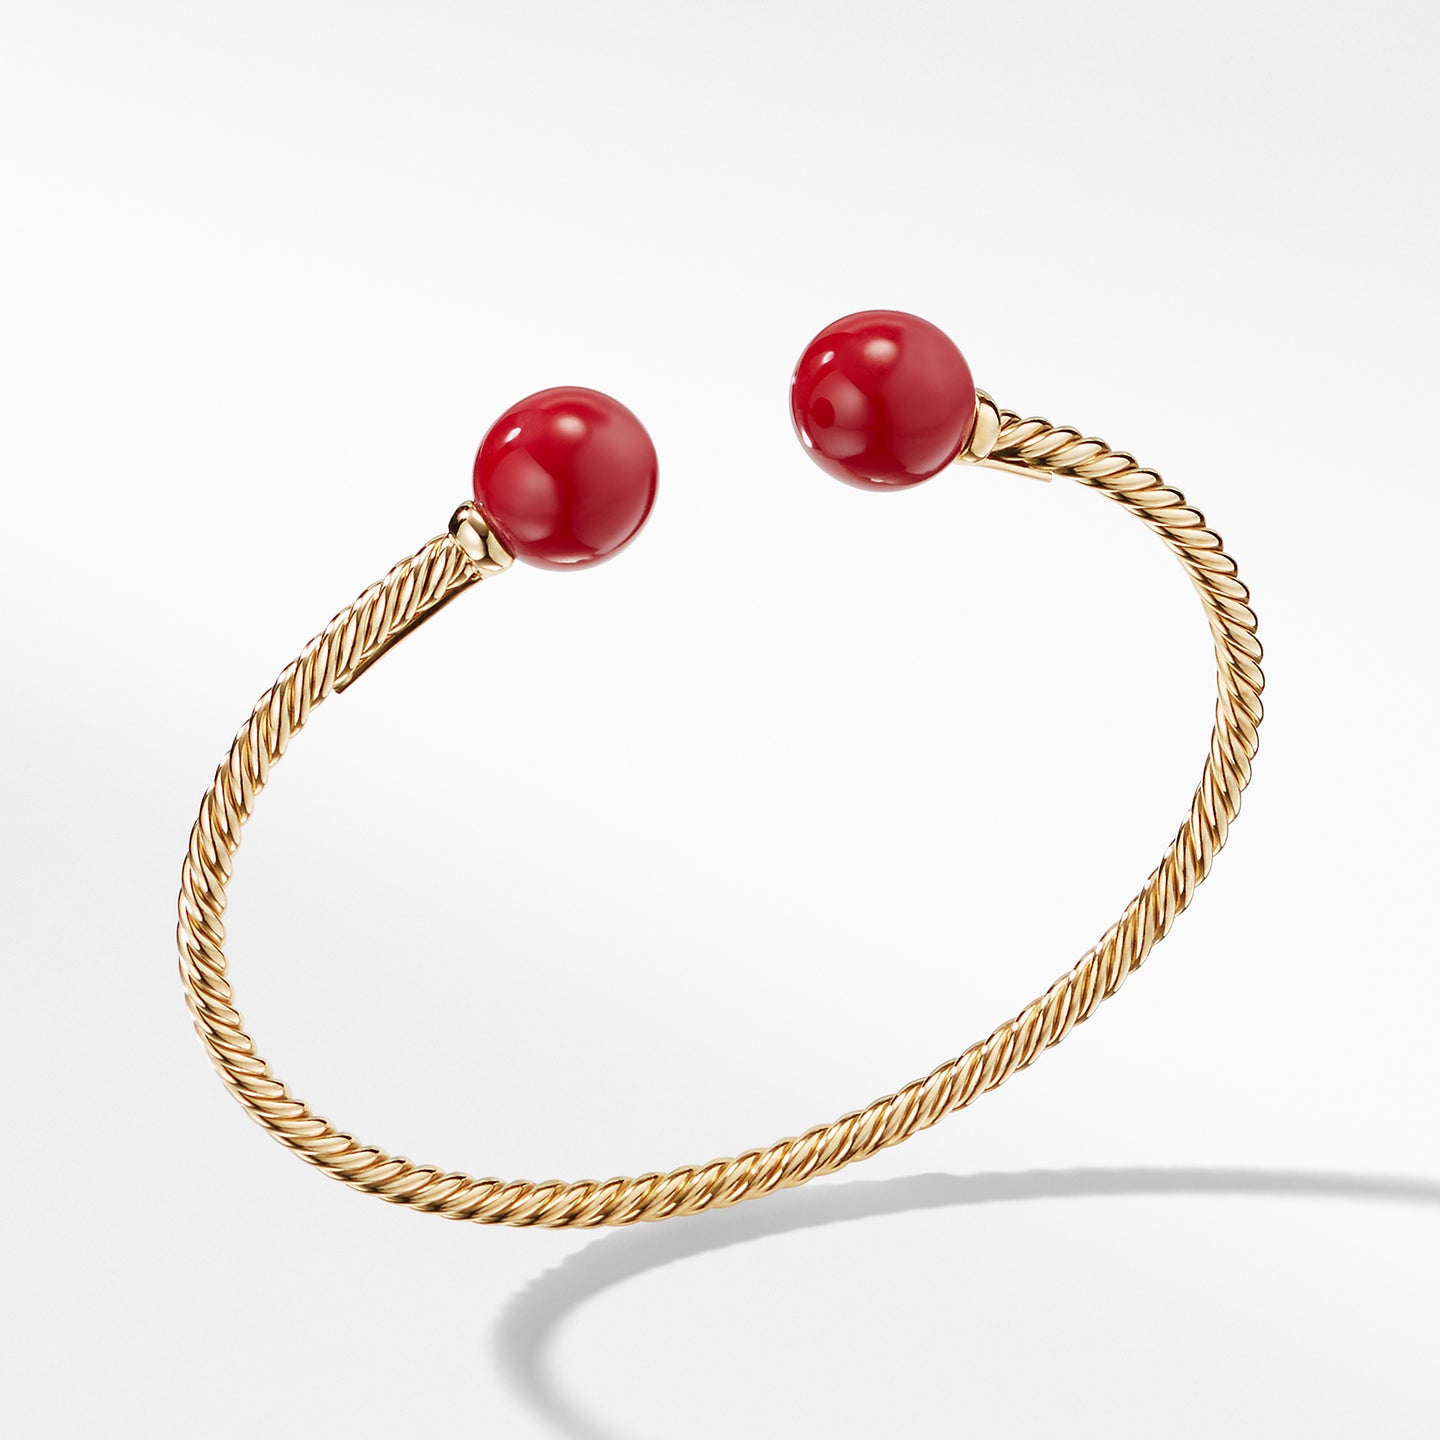 Solari Bead Bracelet with 18K Gold and Red Enamel, Size Large